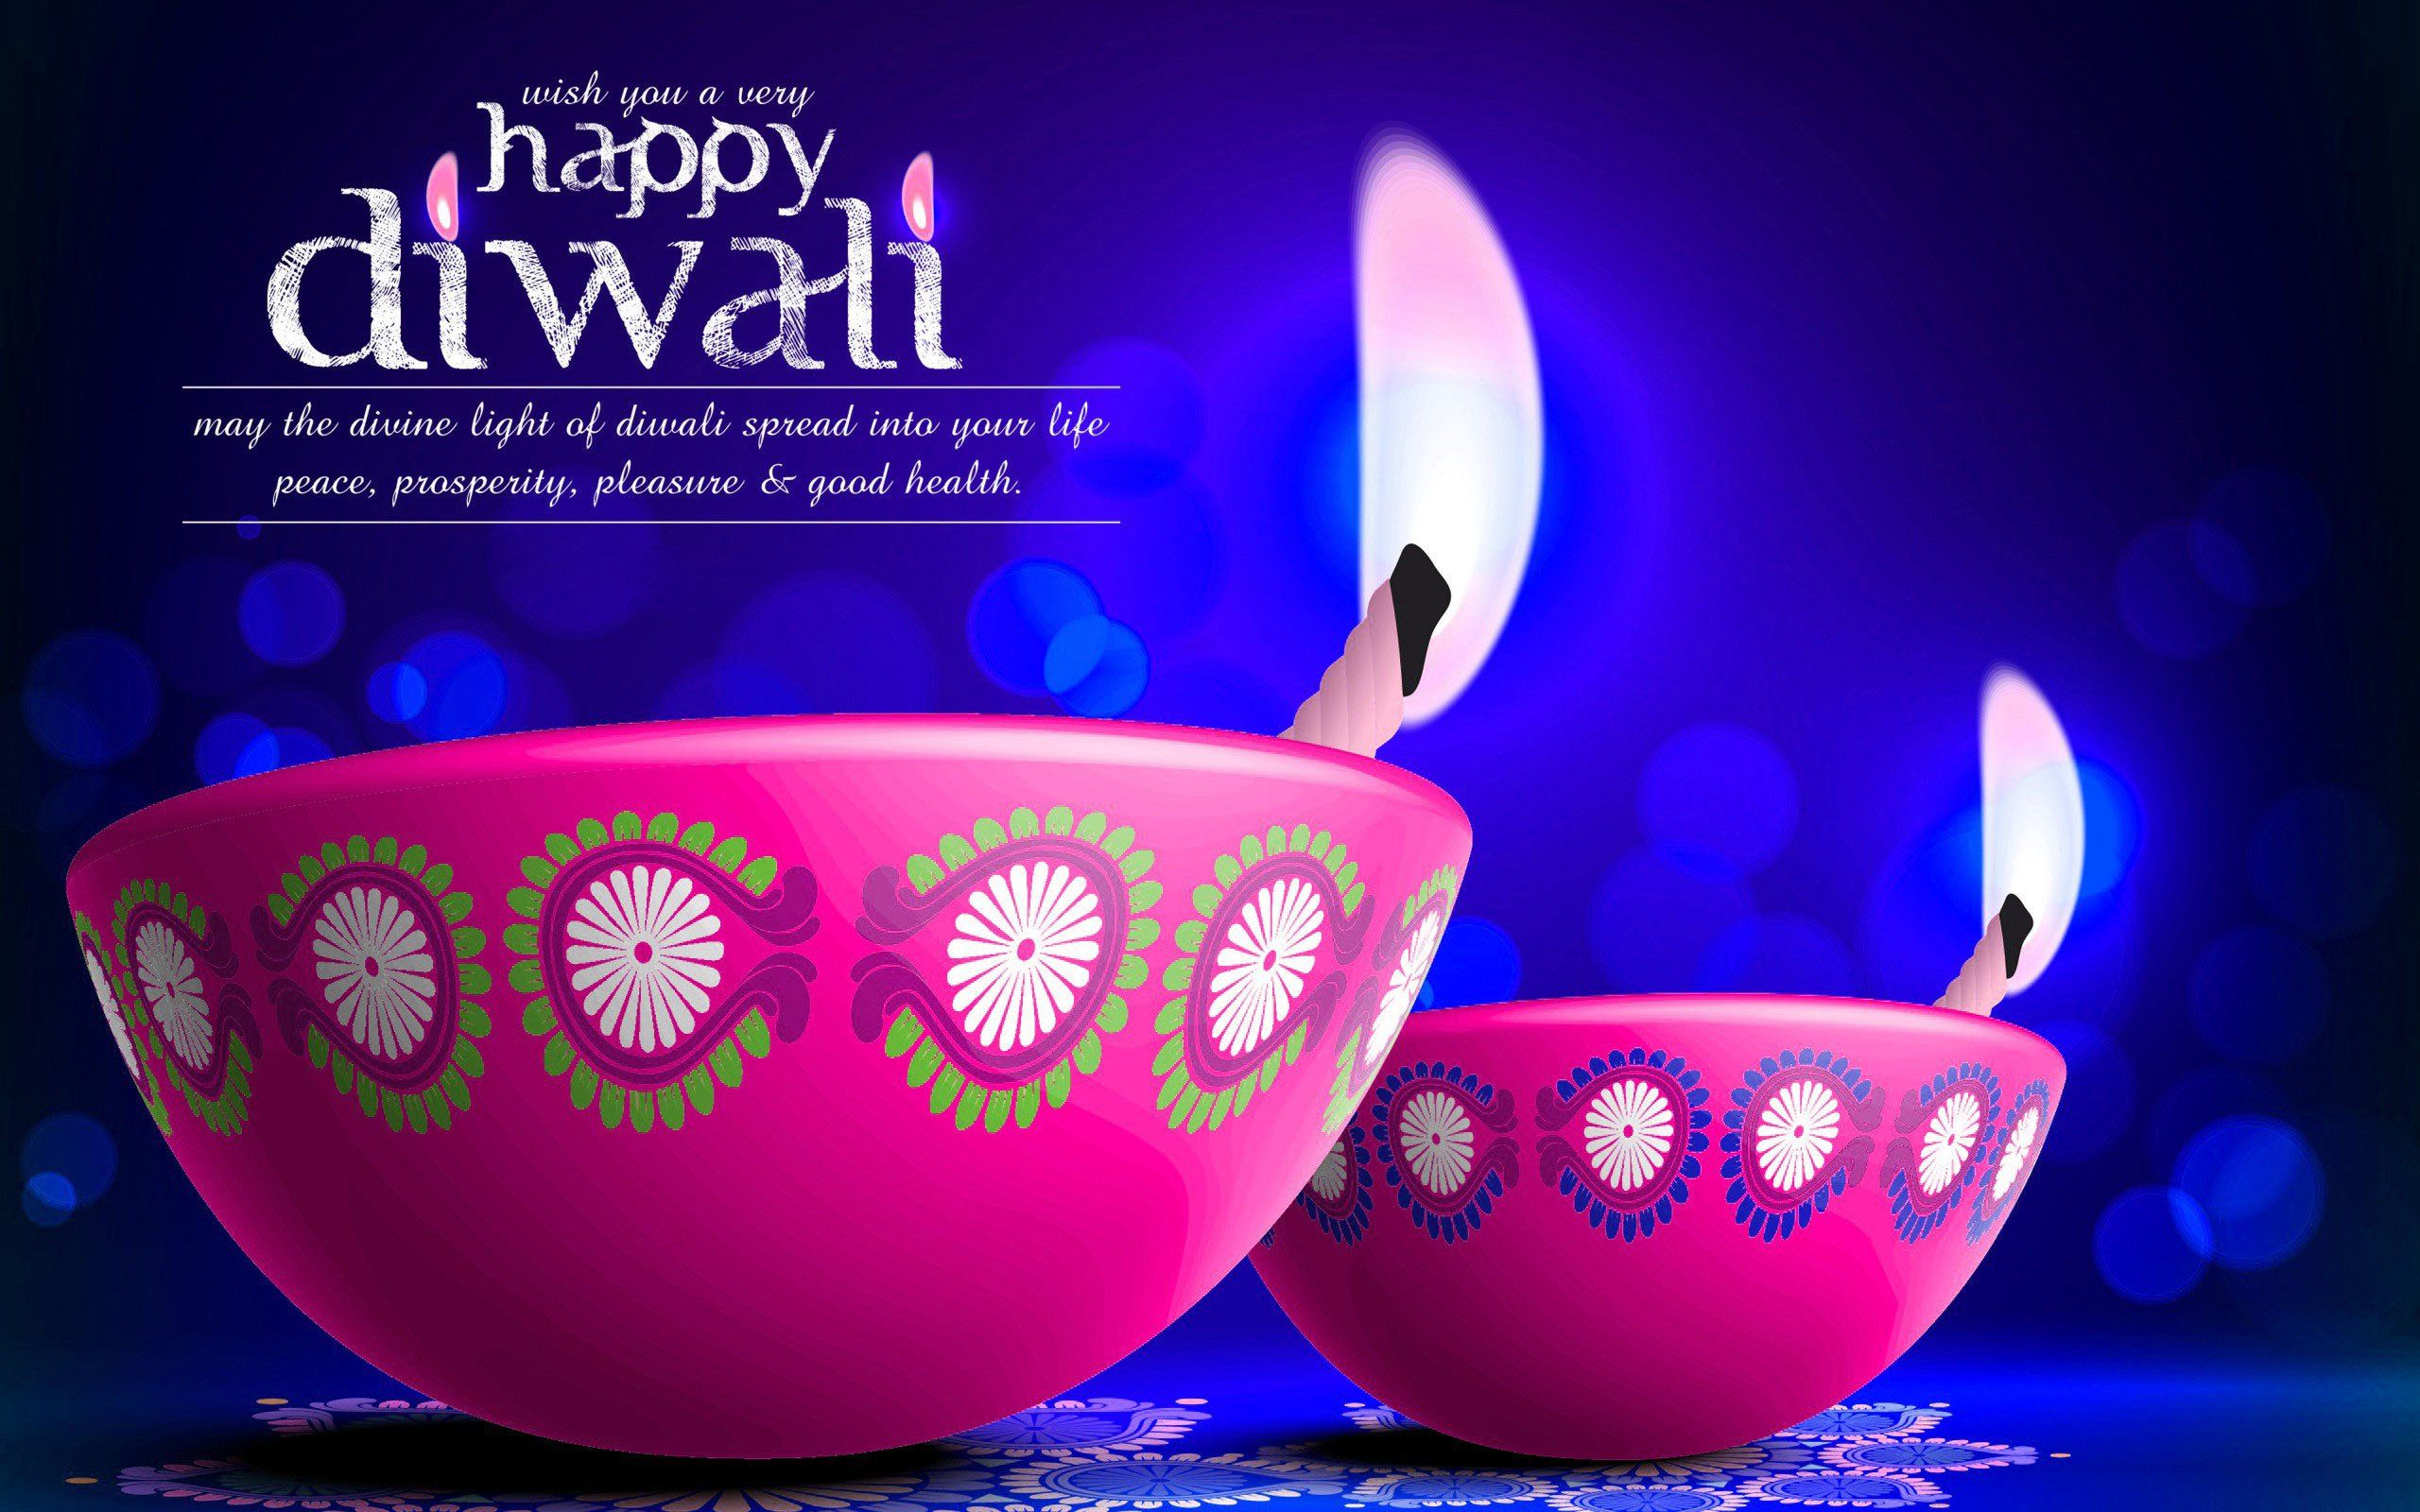 Happy Diwali 2022 HD Wallpaper Image Free Download. Happy Deepavali 2022